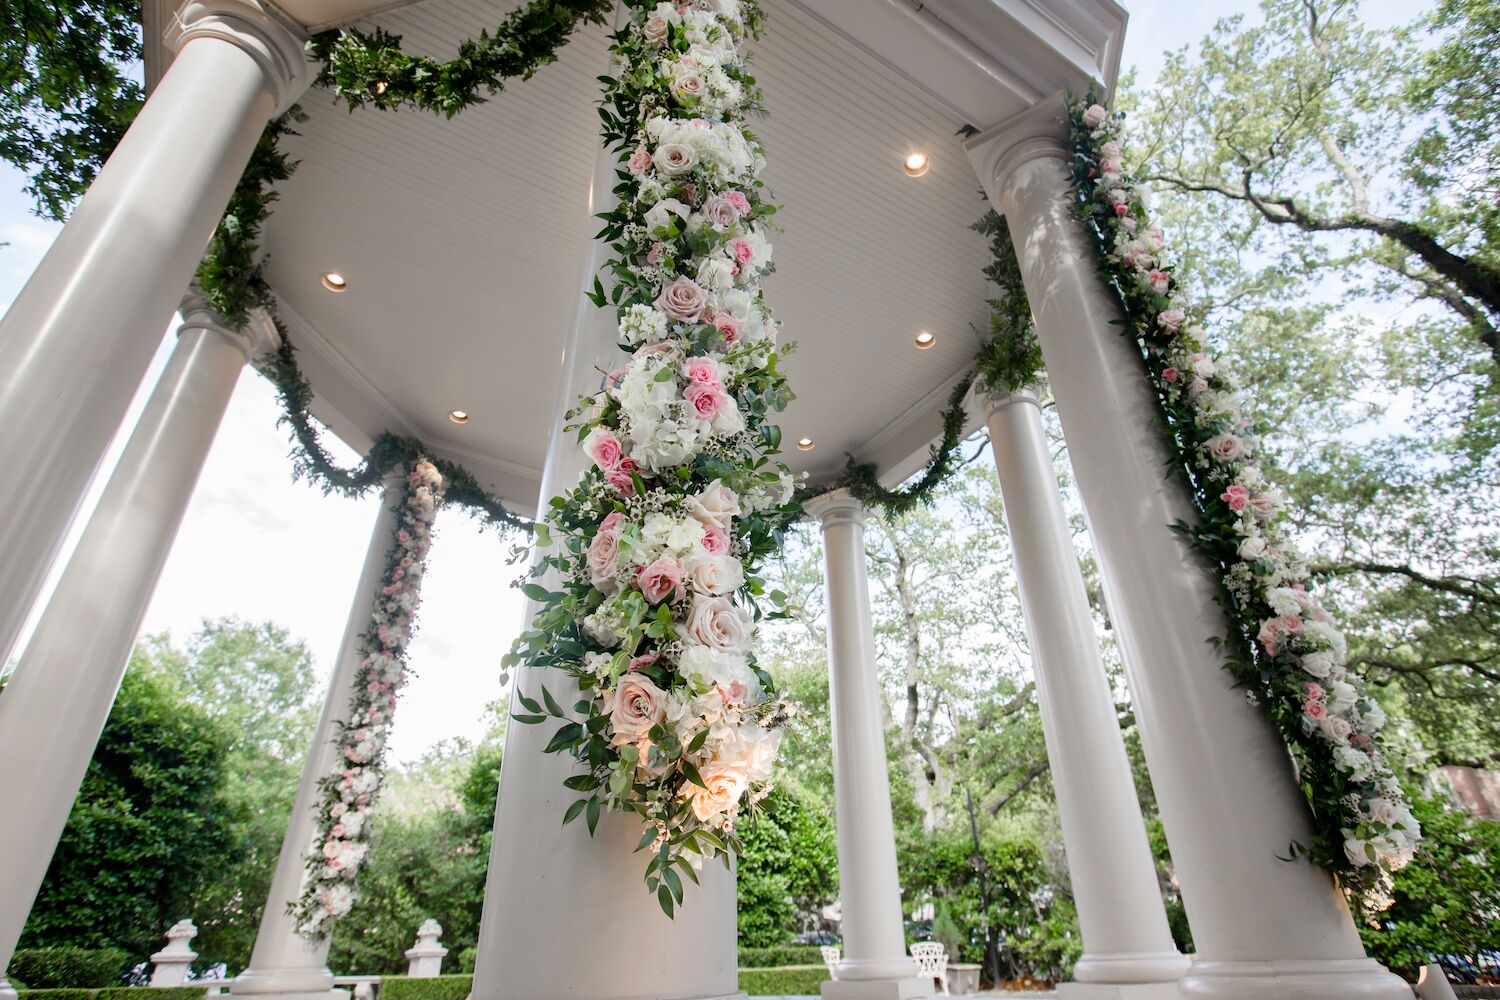 The Elms Mansion gazebo cascading floral decor